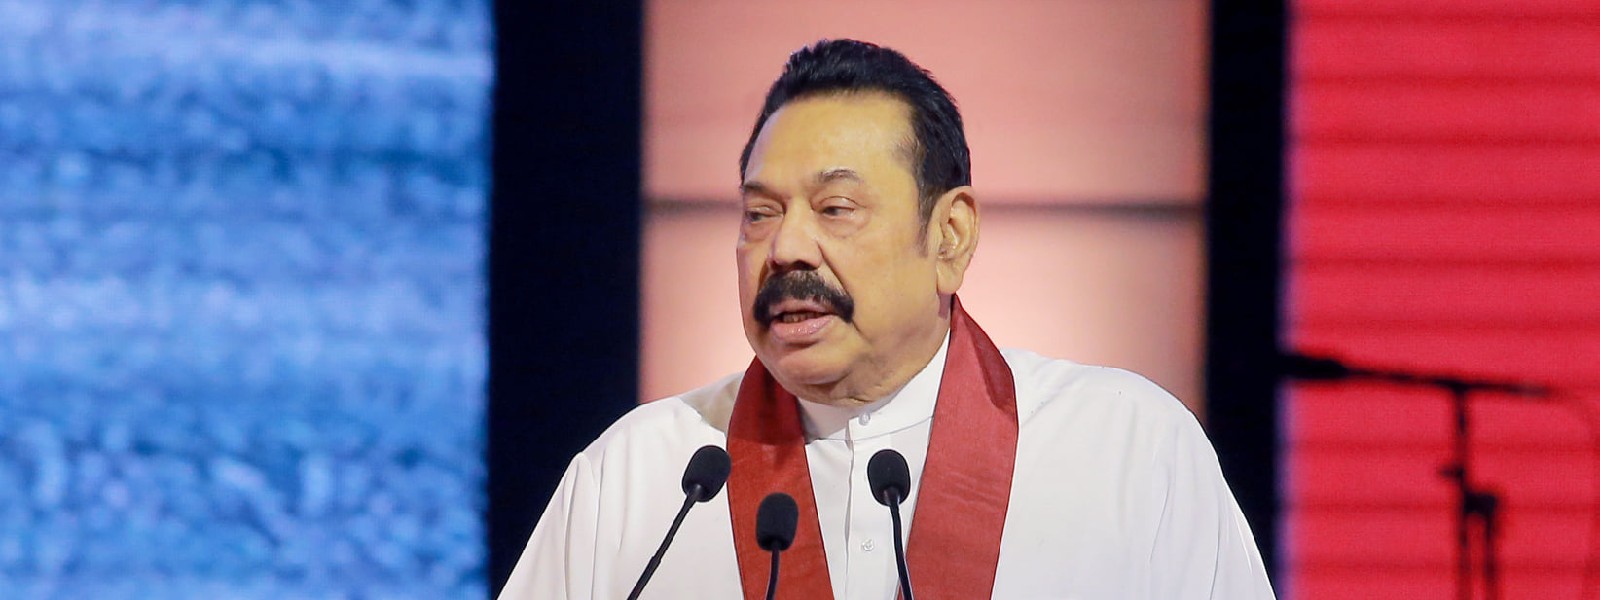 BREAKING: PM Mahinda Rajapaksa says President has NOT asked him to step down